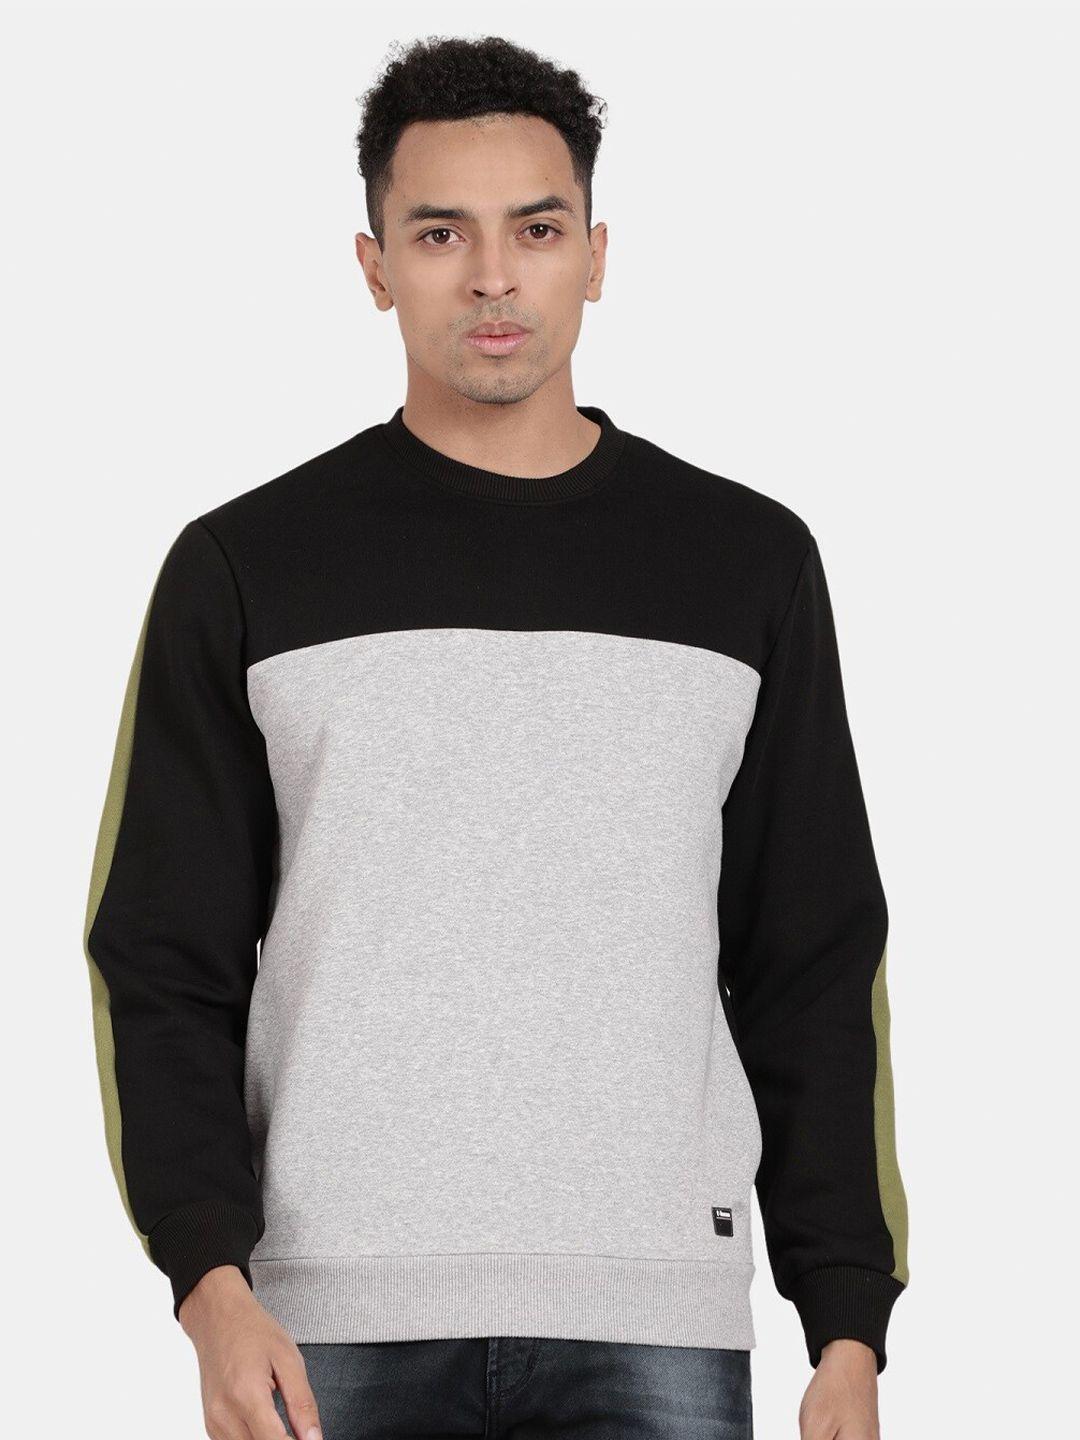 t-base-men-colourblocked-pullover-sweatshirt